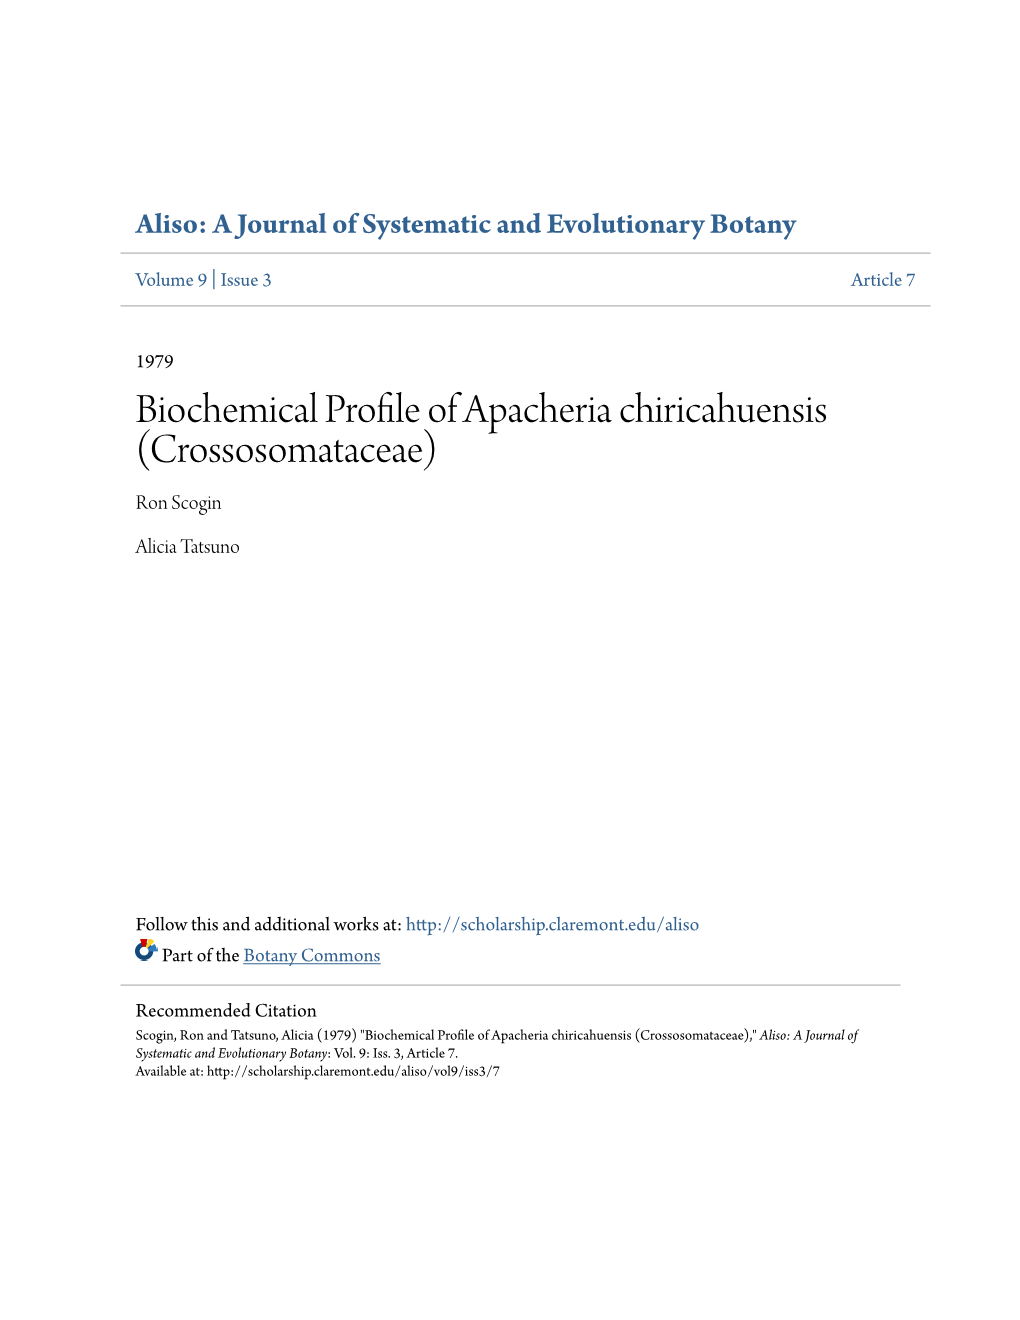 Biochemical Profile of Apacheria Chiricahuensis (Crossosomataceae) Ron Scogin